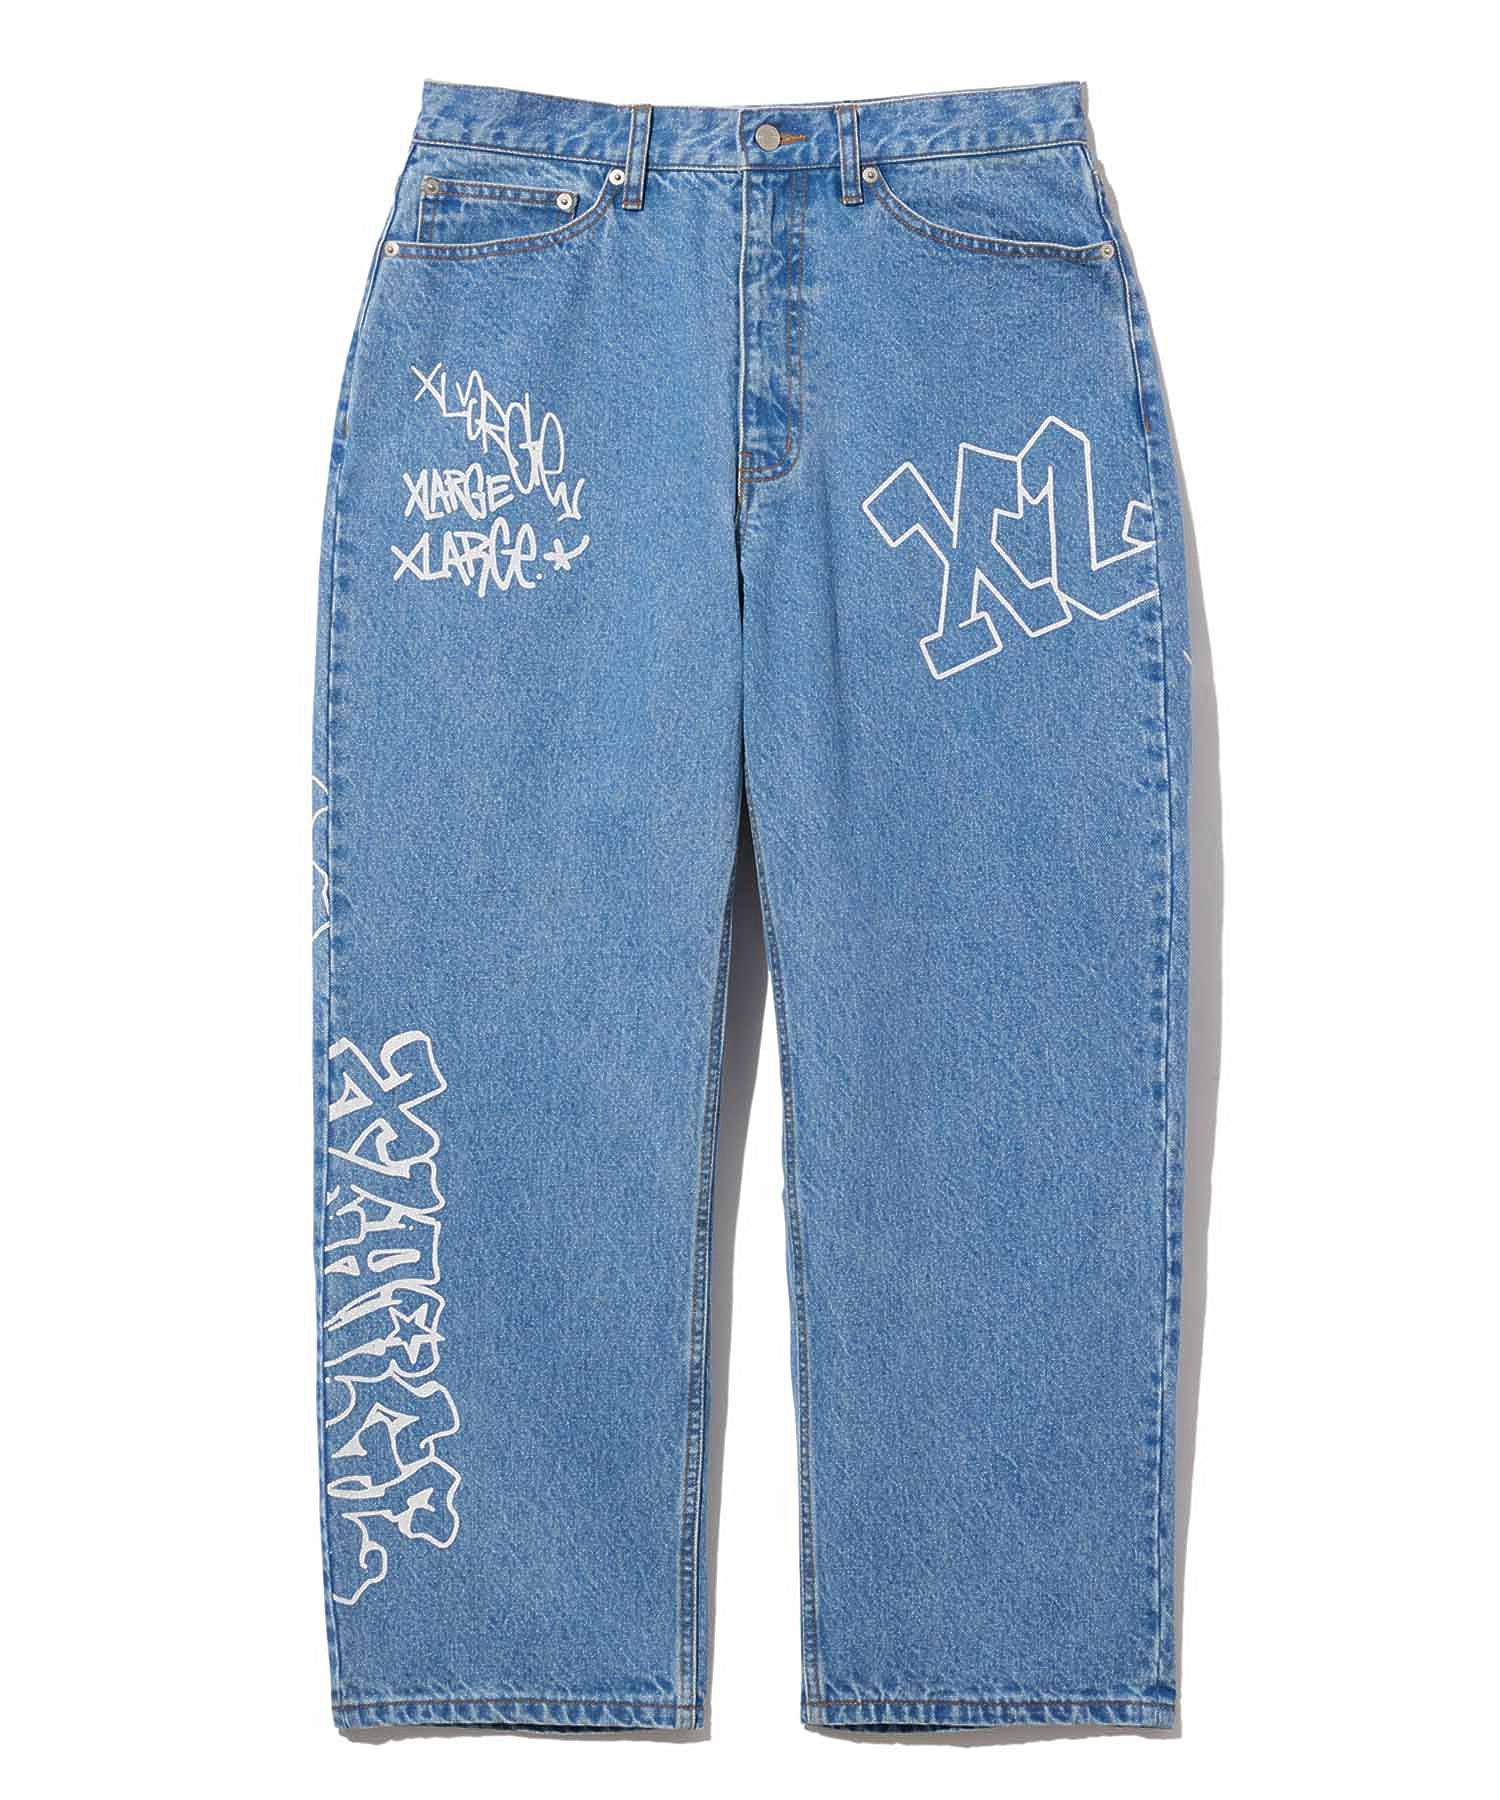 PERSONSOUL*23FW Graffiti Jeans XLサイズファッション